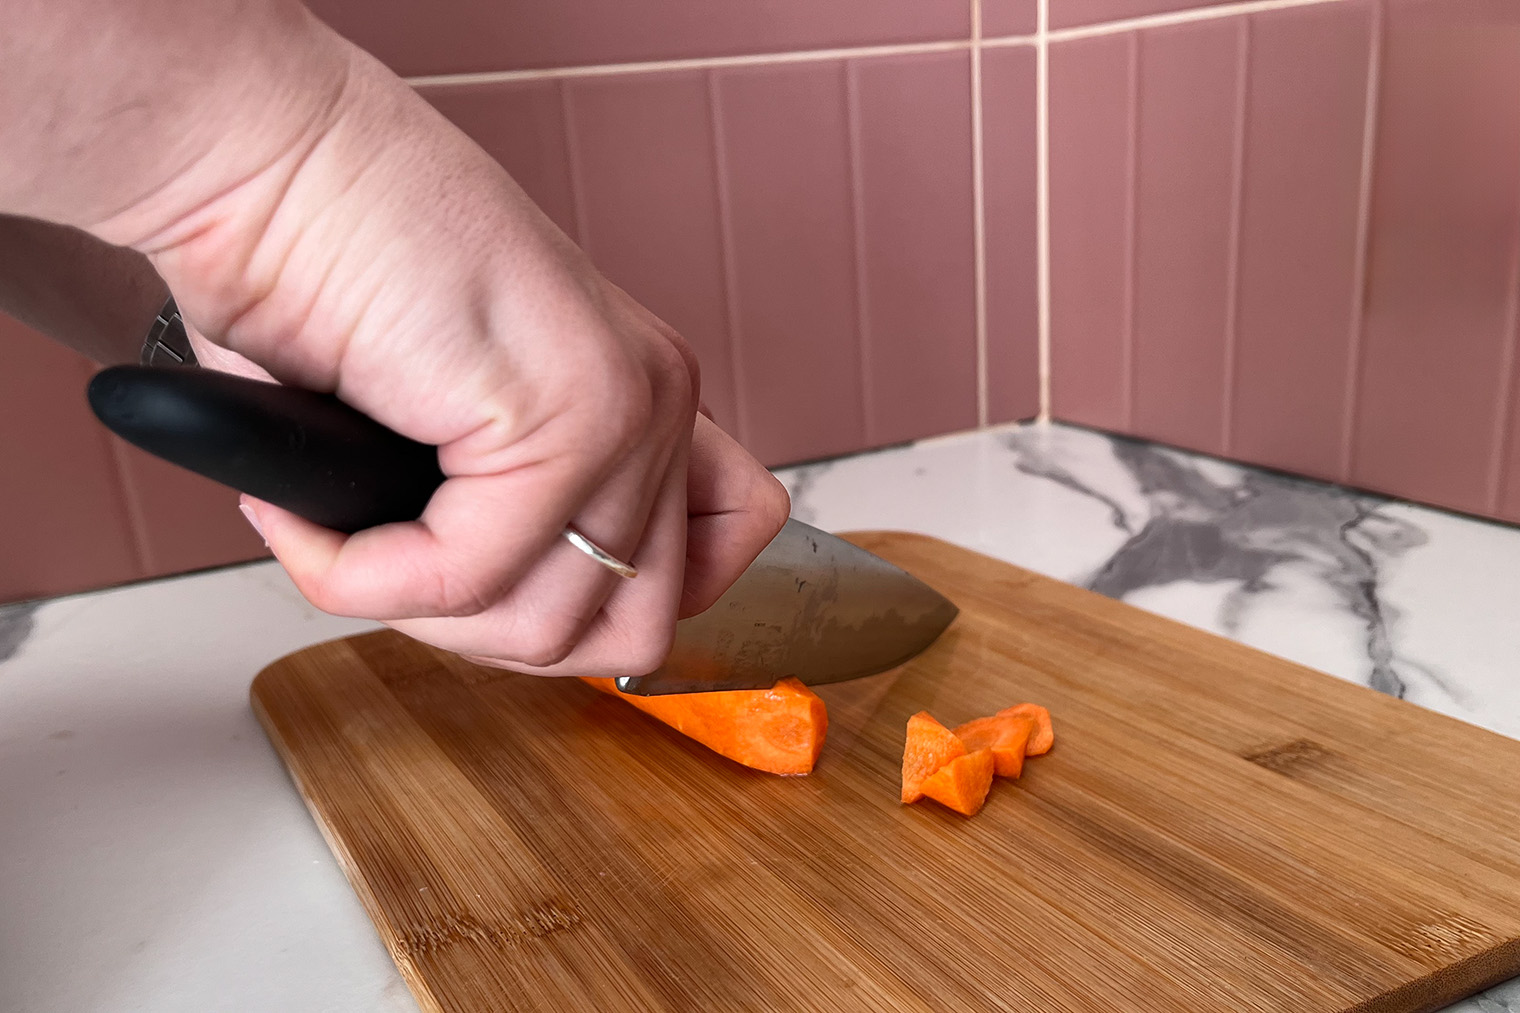 Сначала нарезал целую тонкую морковь